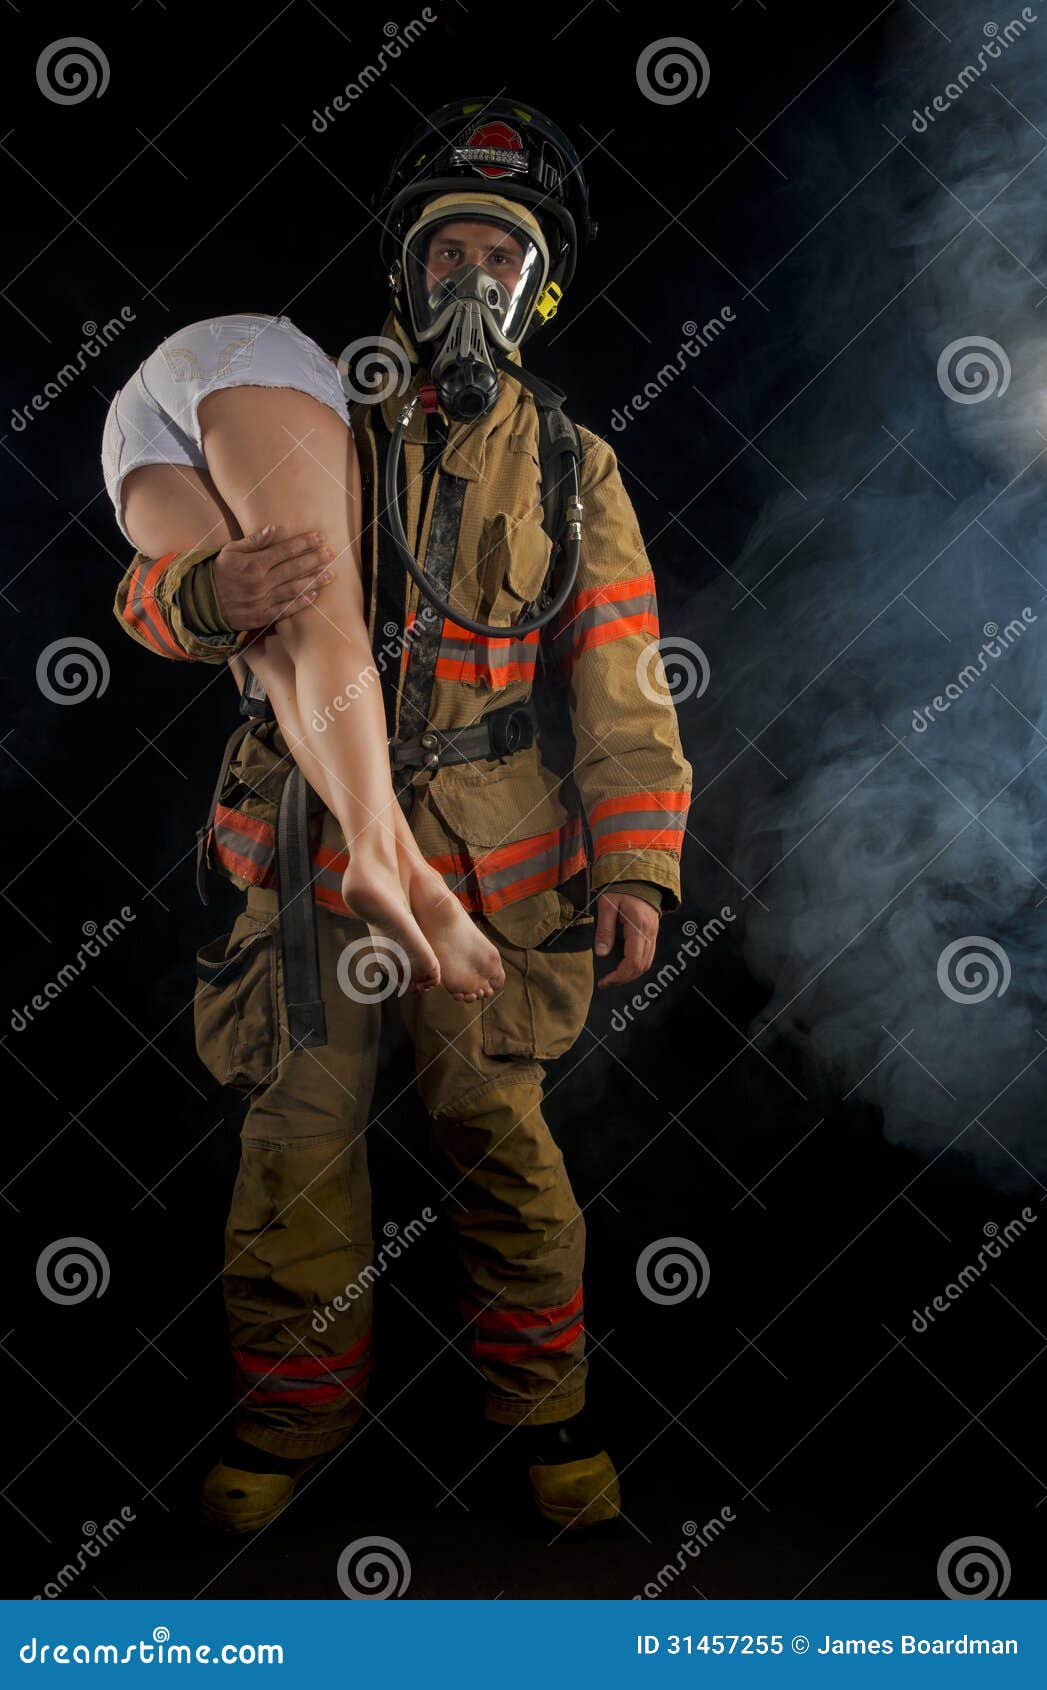 fireman saving a victim